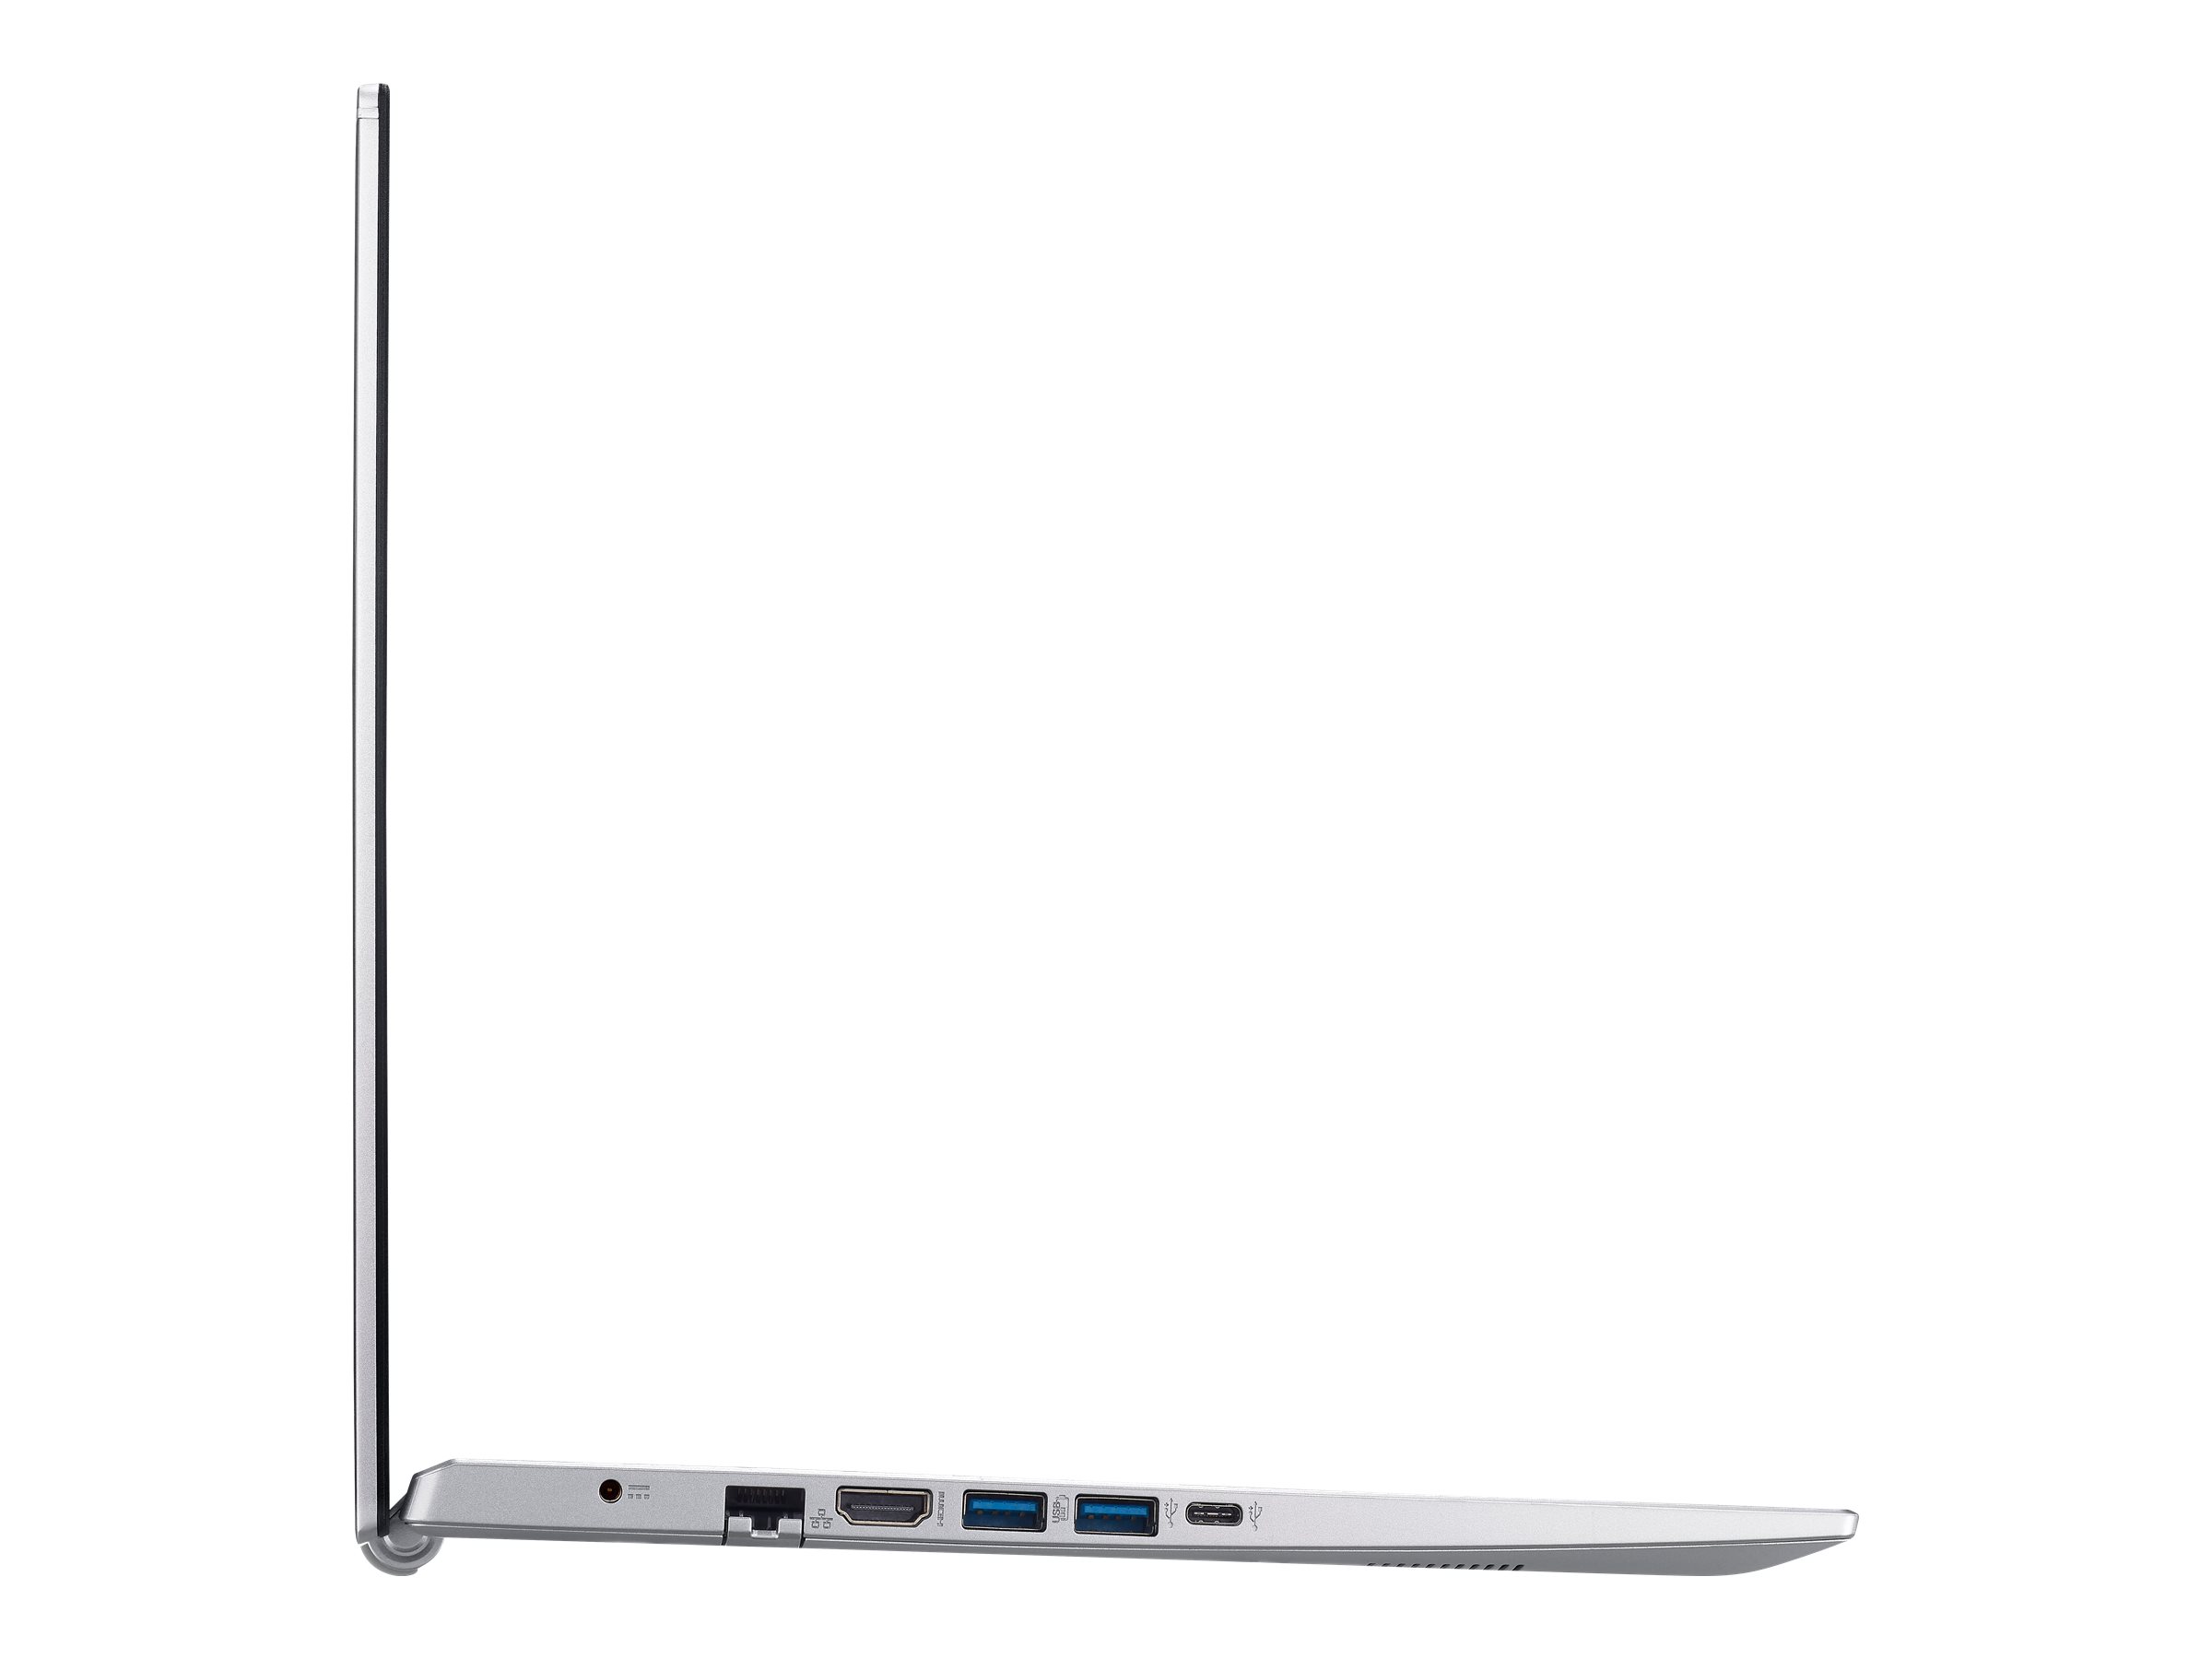 Acer Aspire 5 A515-56-36UT Slim Laptop | 15.6" Full HD Display | 11th Gen Intel Core i3-1115G4 Processor | 4GB DDR4 | 128GB NVMe SSD | WiFi 6 | Amazon Alexa | Windows 10 Home (S Mode) - image 7 of 8